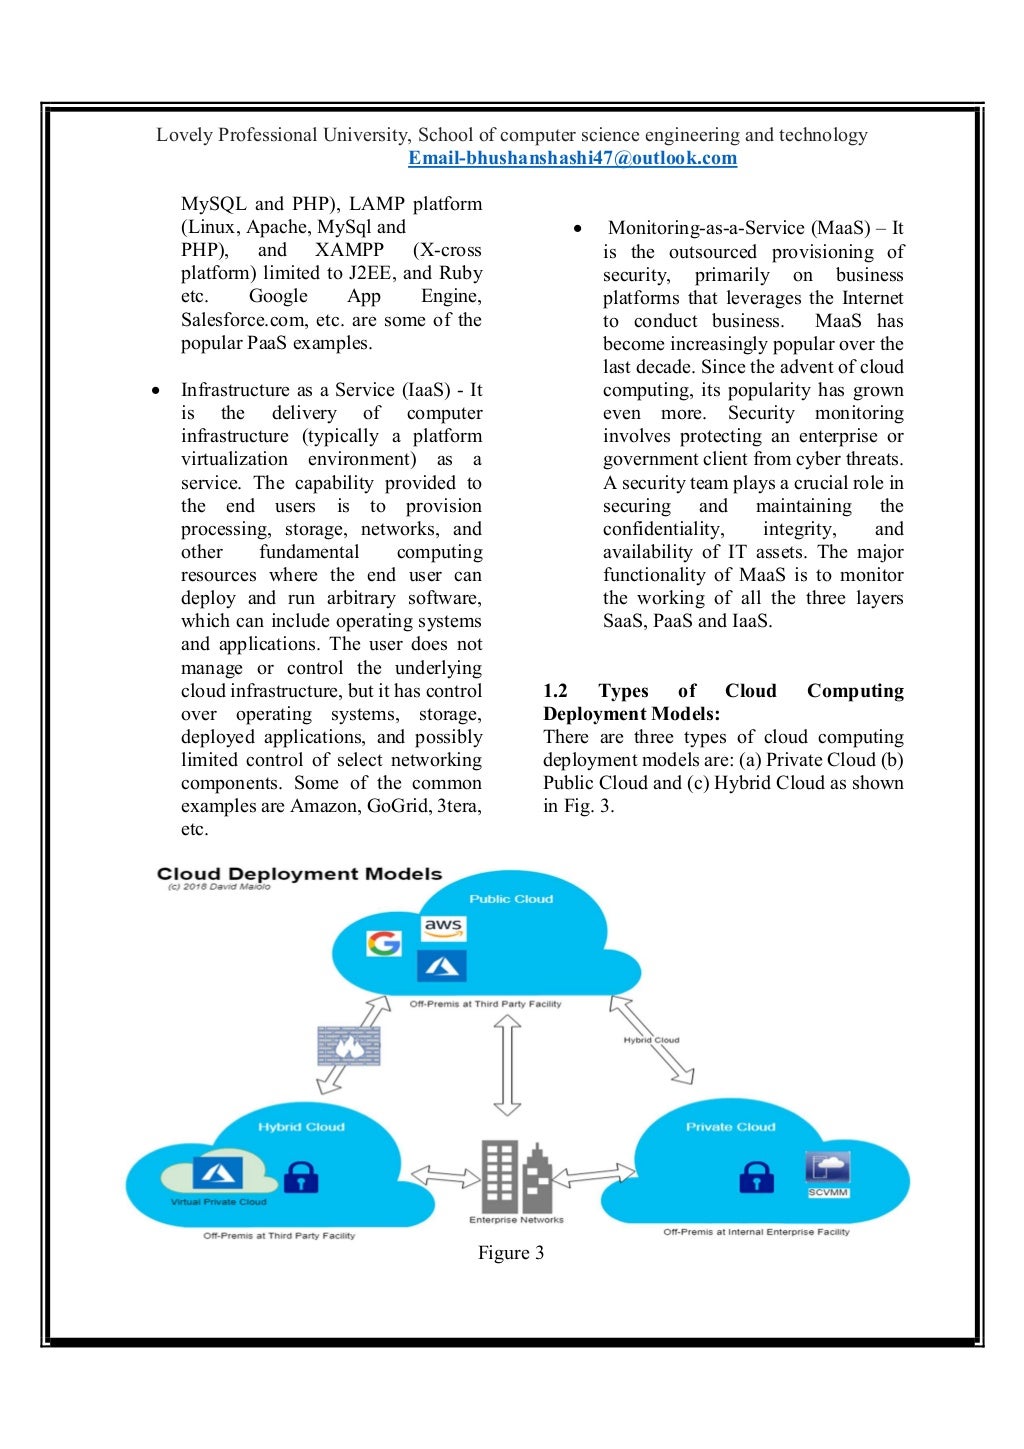 cloud computing paper presentation pdf